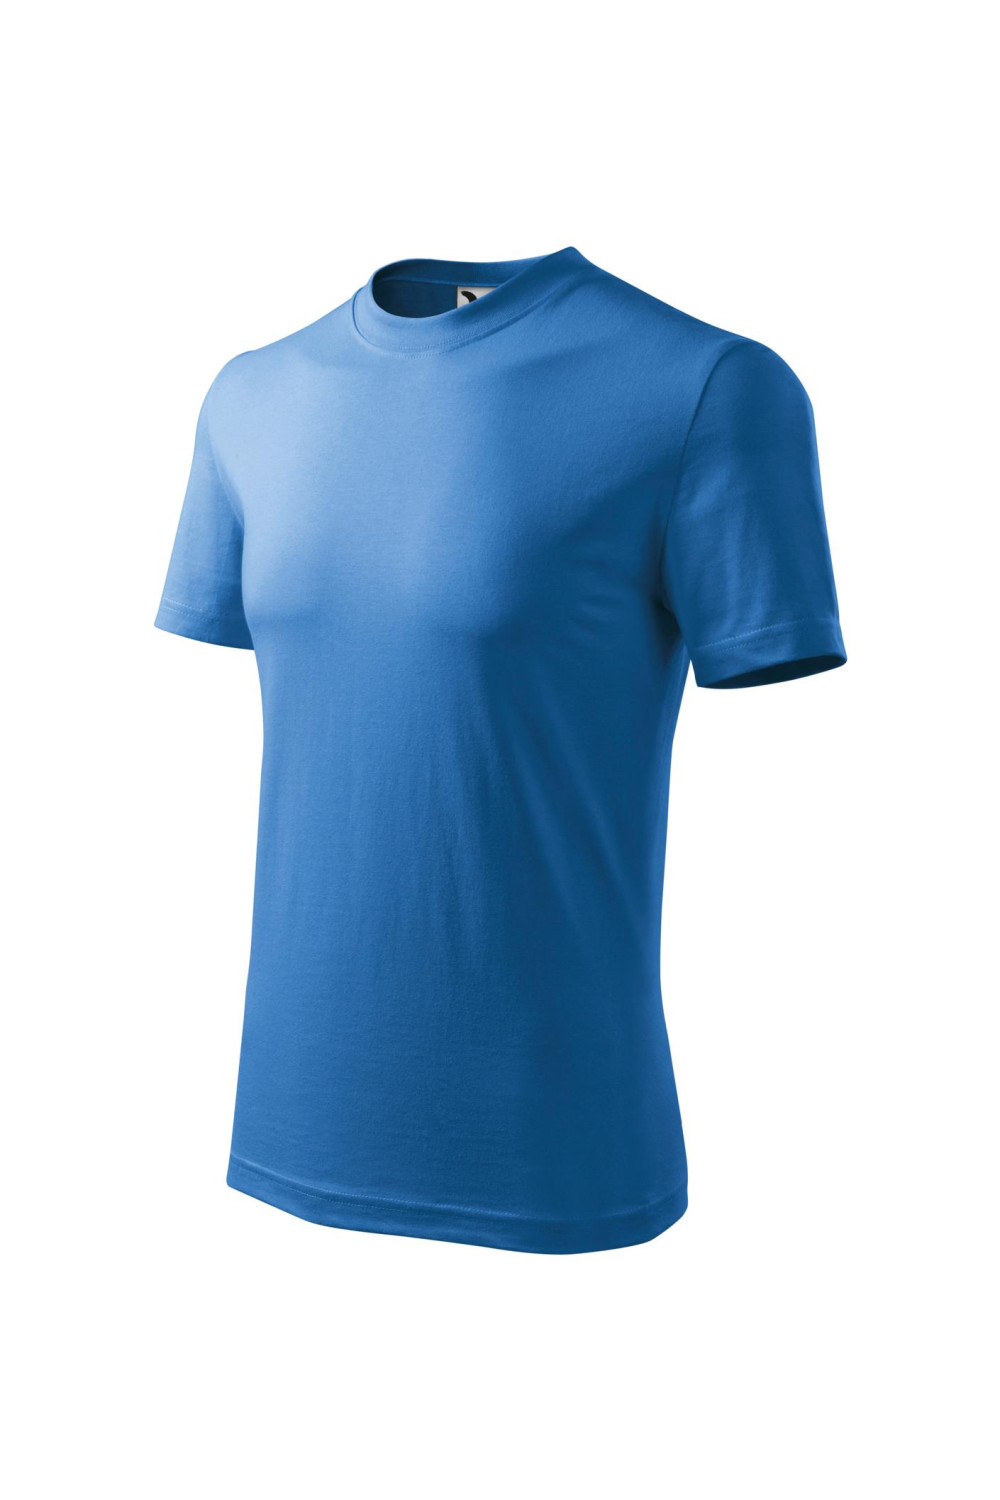 HEAVY 110 MALFINI ADLER Koszulka t-shirt unisex 100% bawełna lazurowy